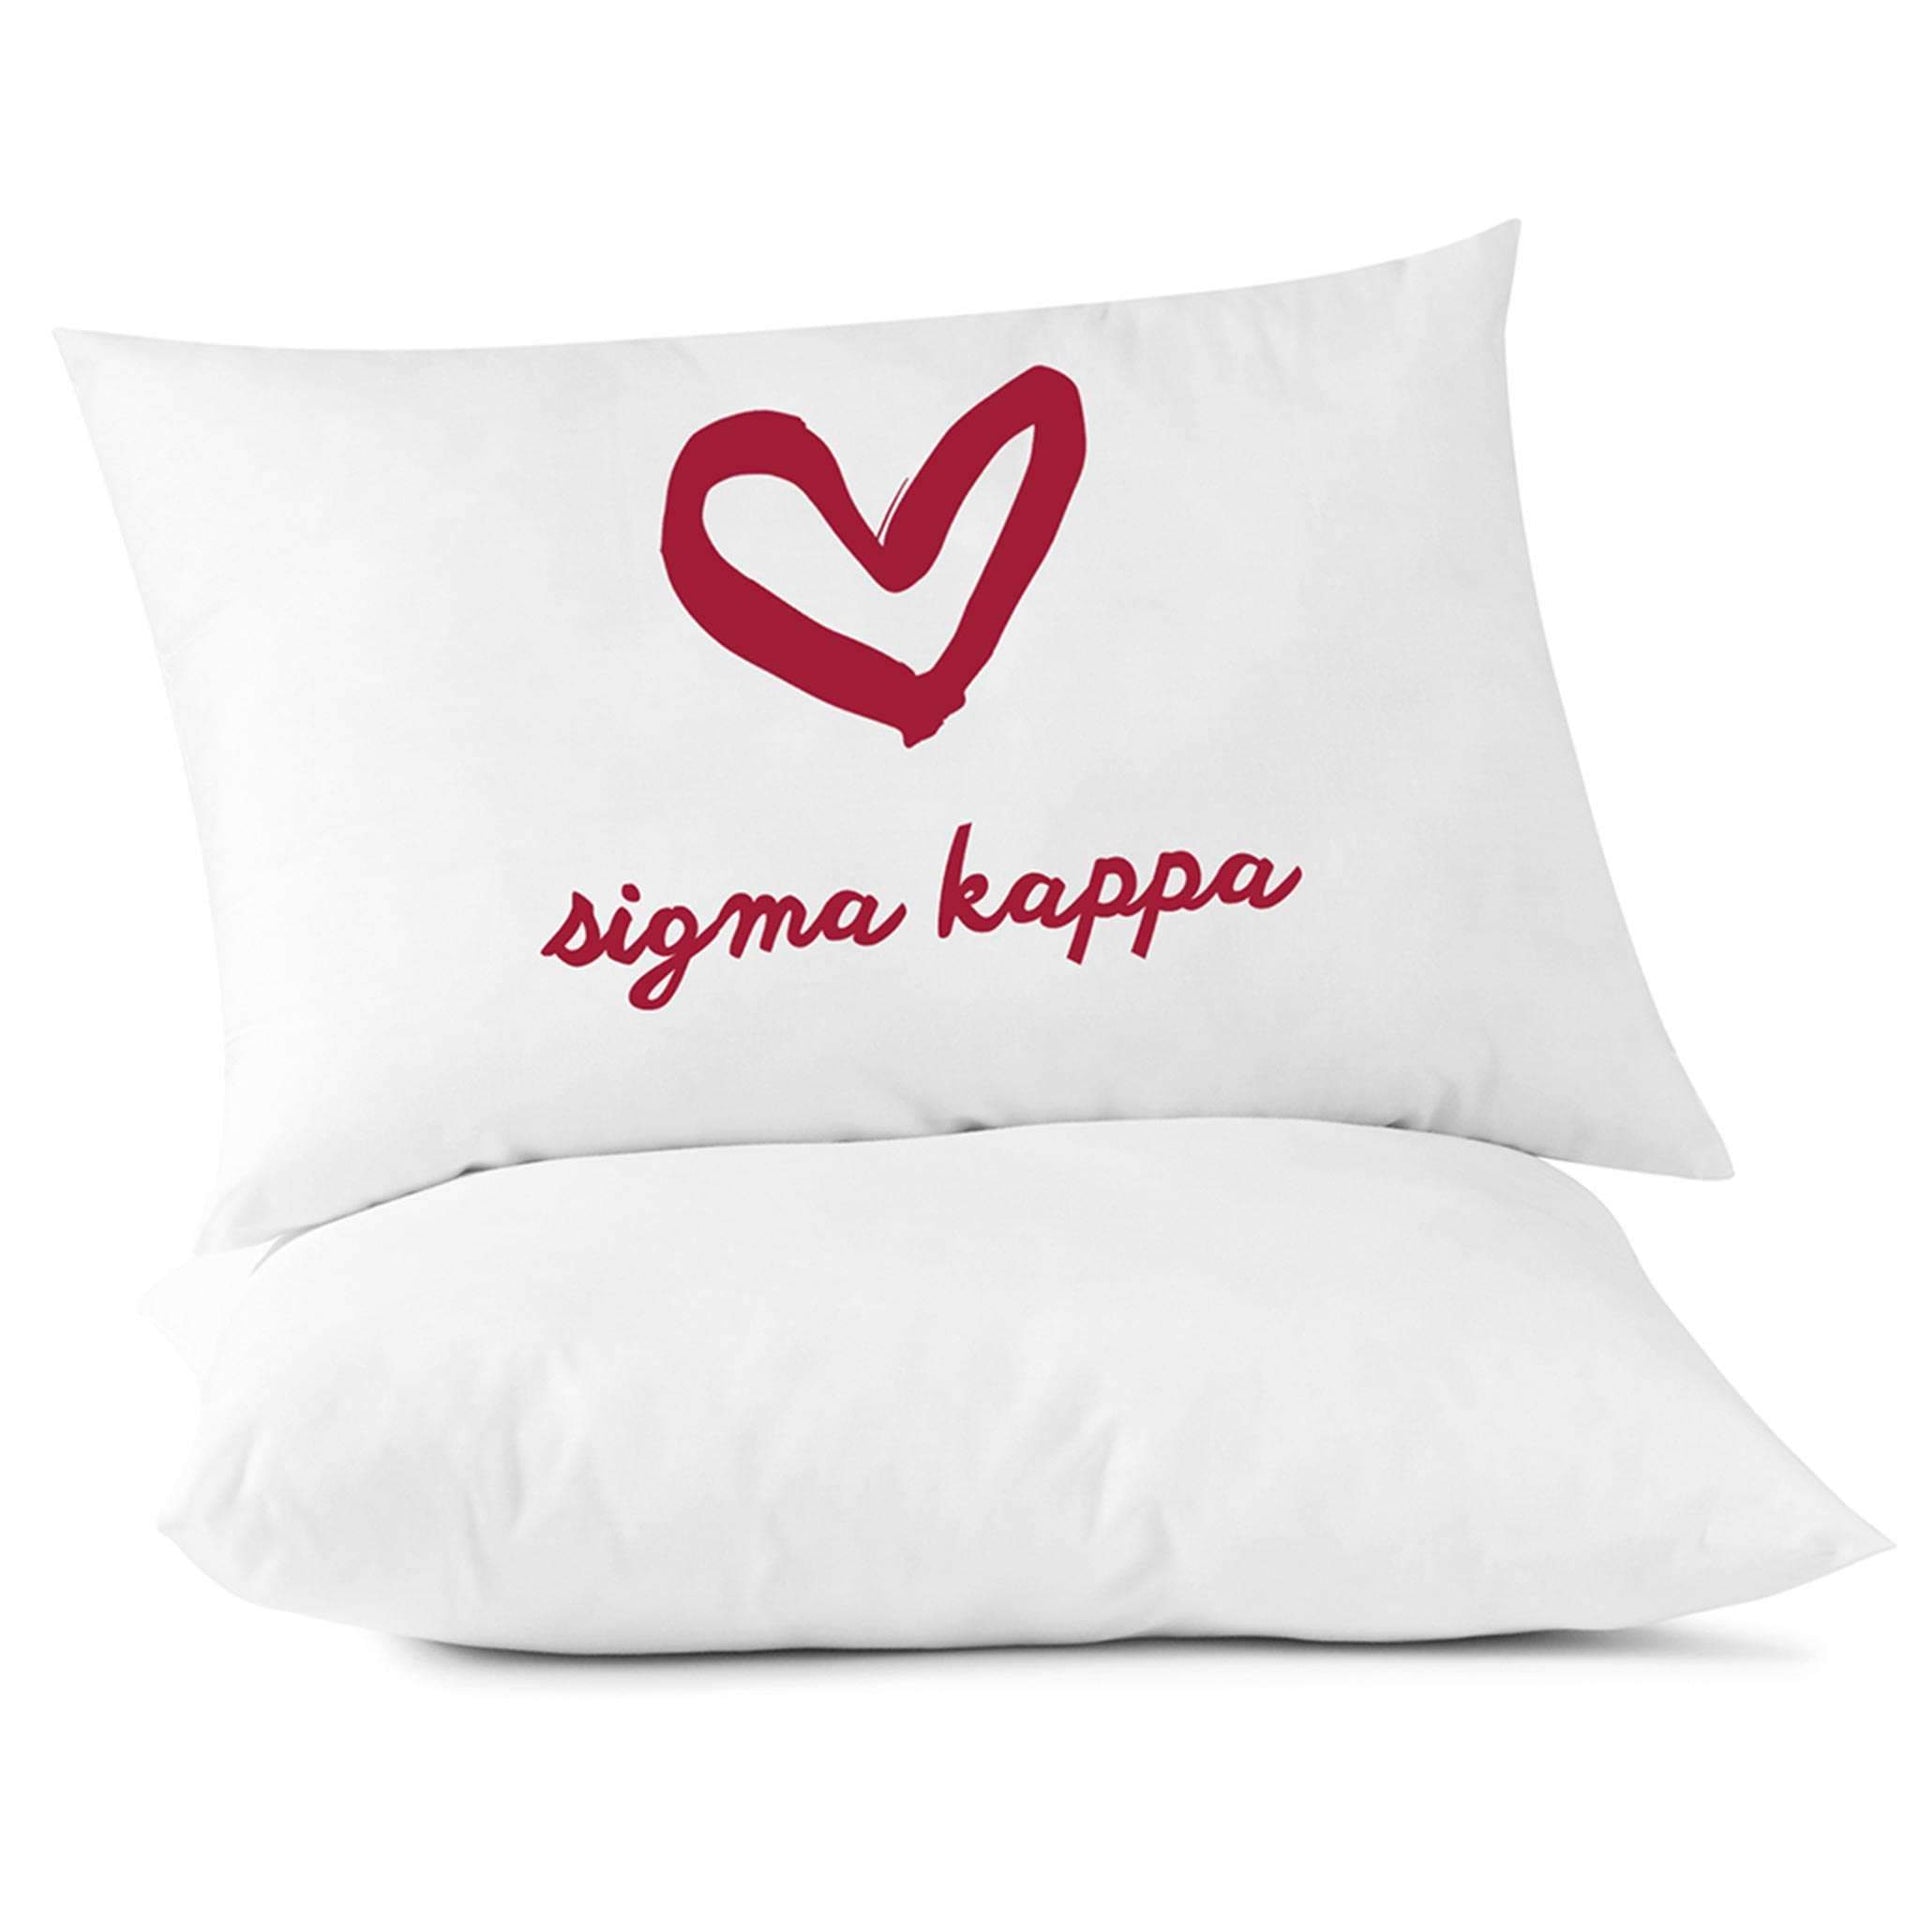 SK sorority name with heart design custom printed on pillowcase.